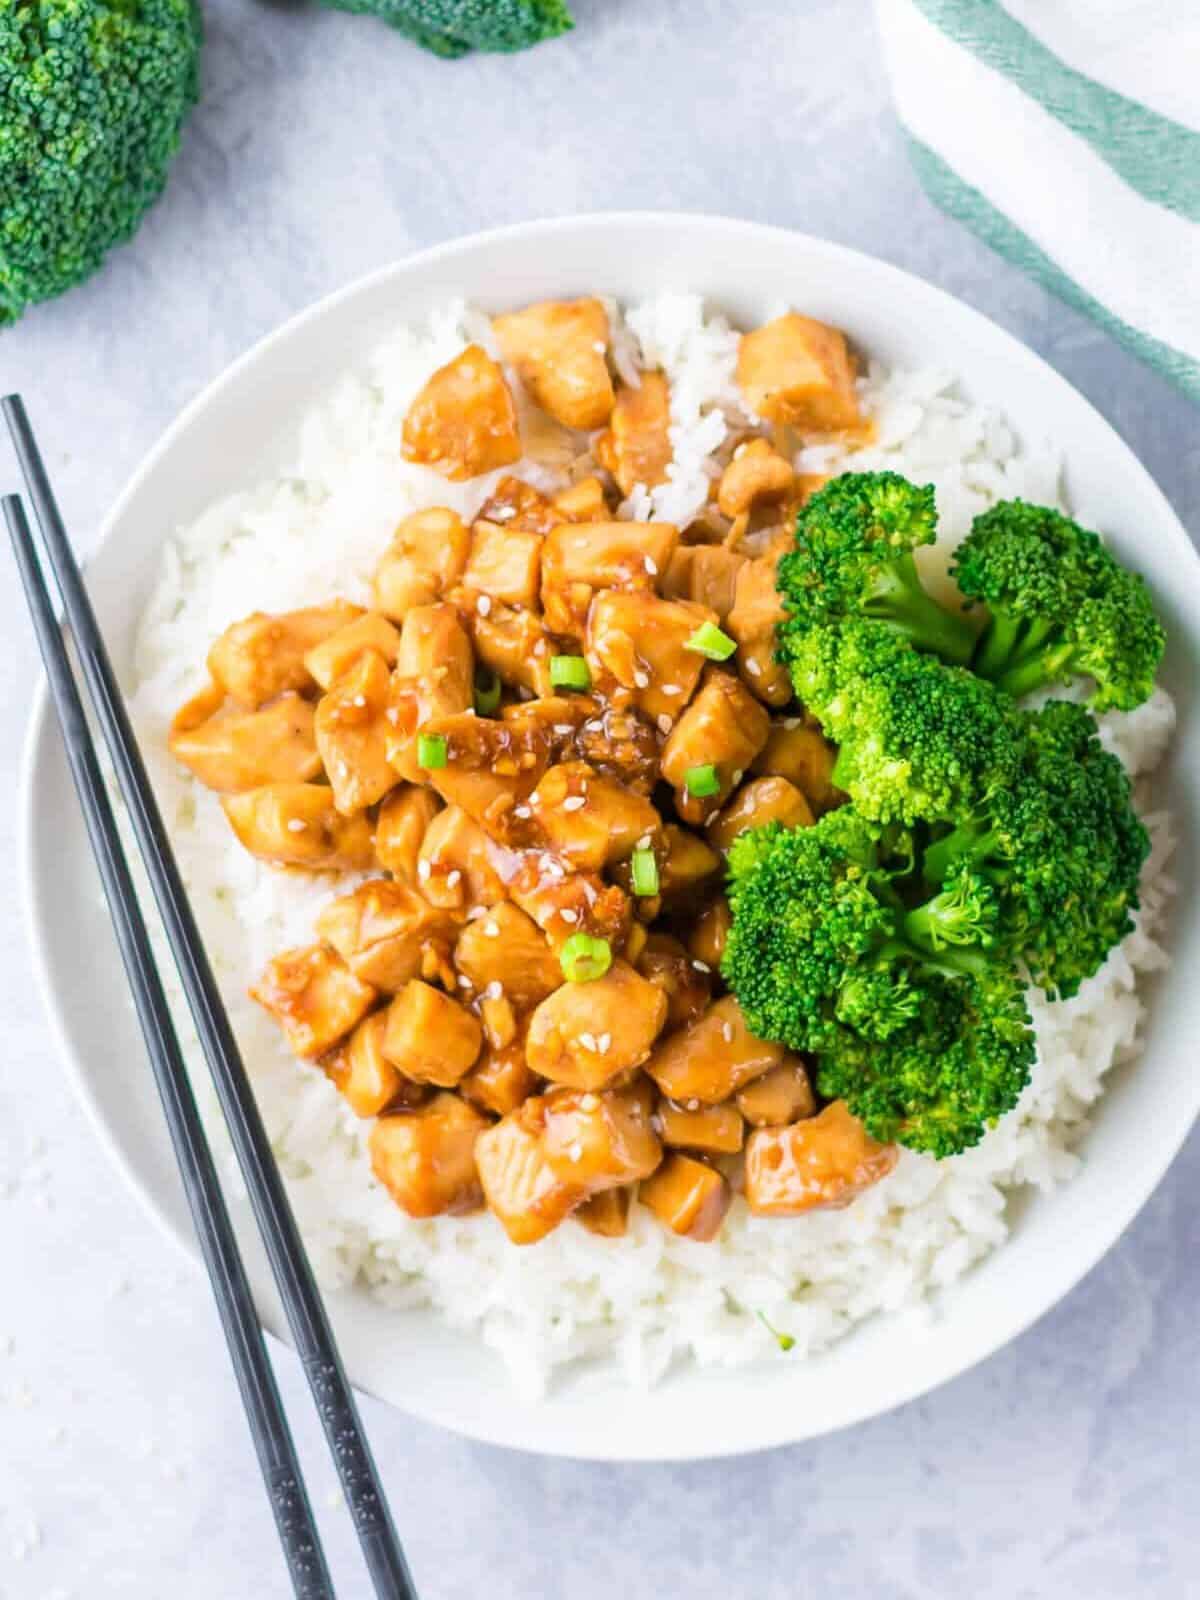 teriyaki chicken over rice with broccoli